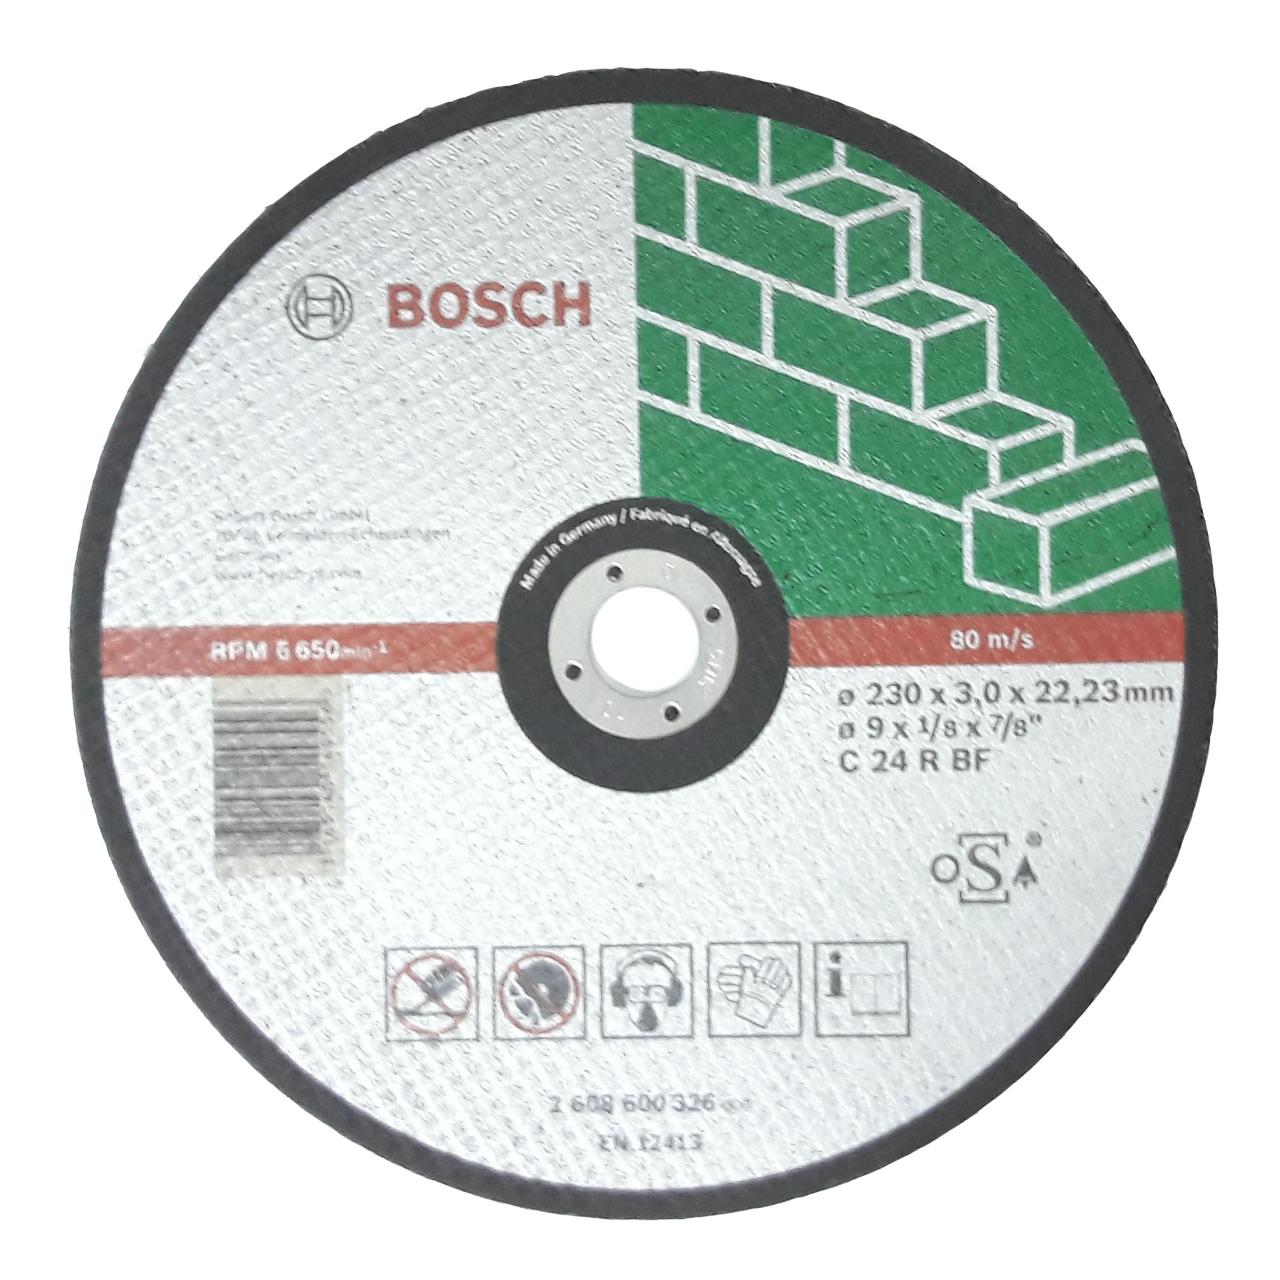 CLZ202 Bosch 230x3 mm Mermer Kesici Taş 2 608 600 326